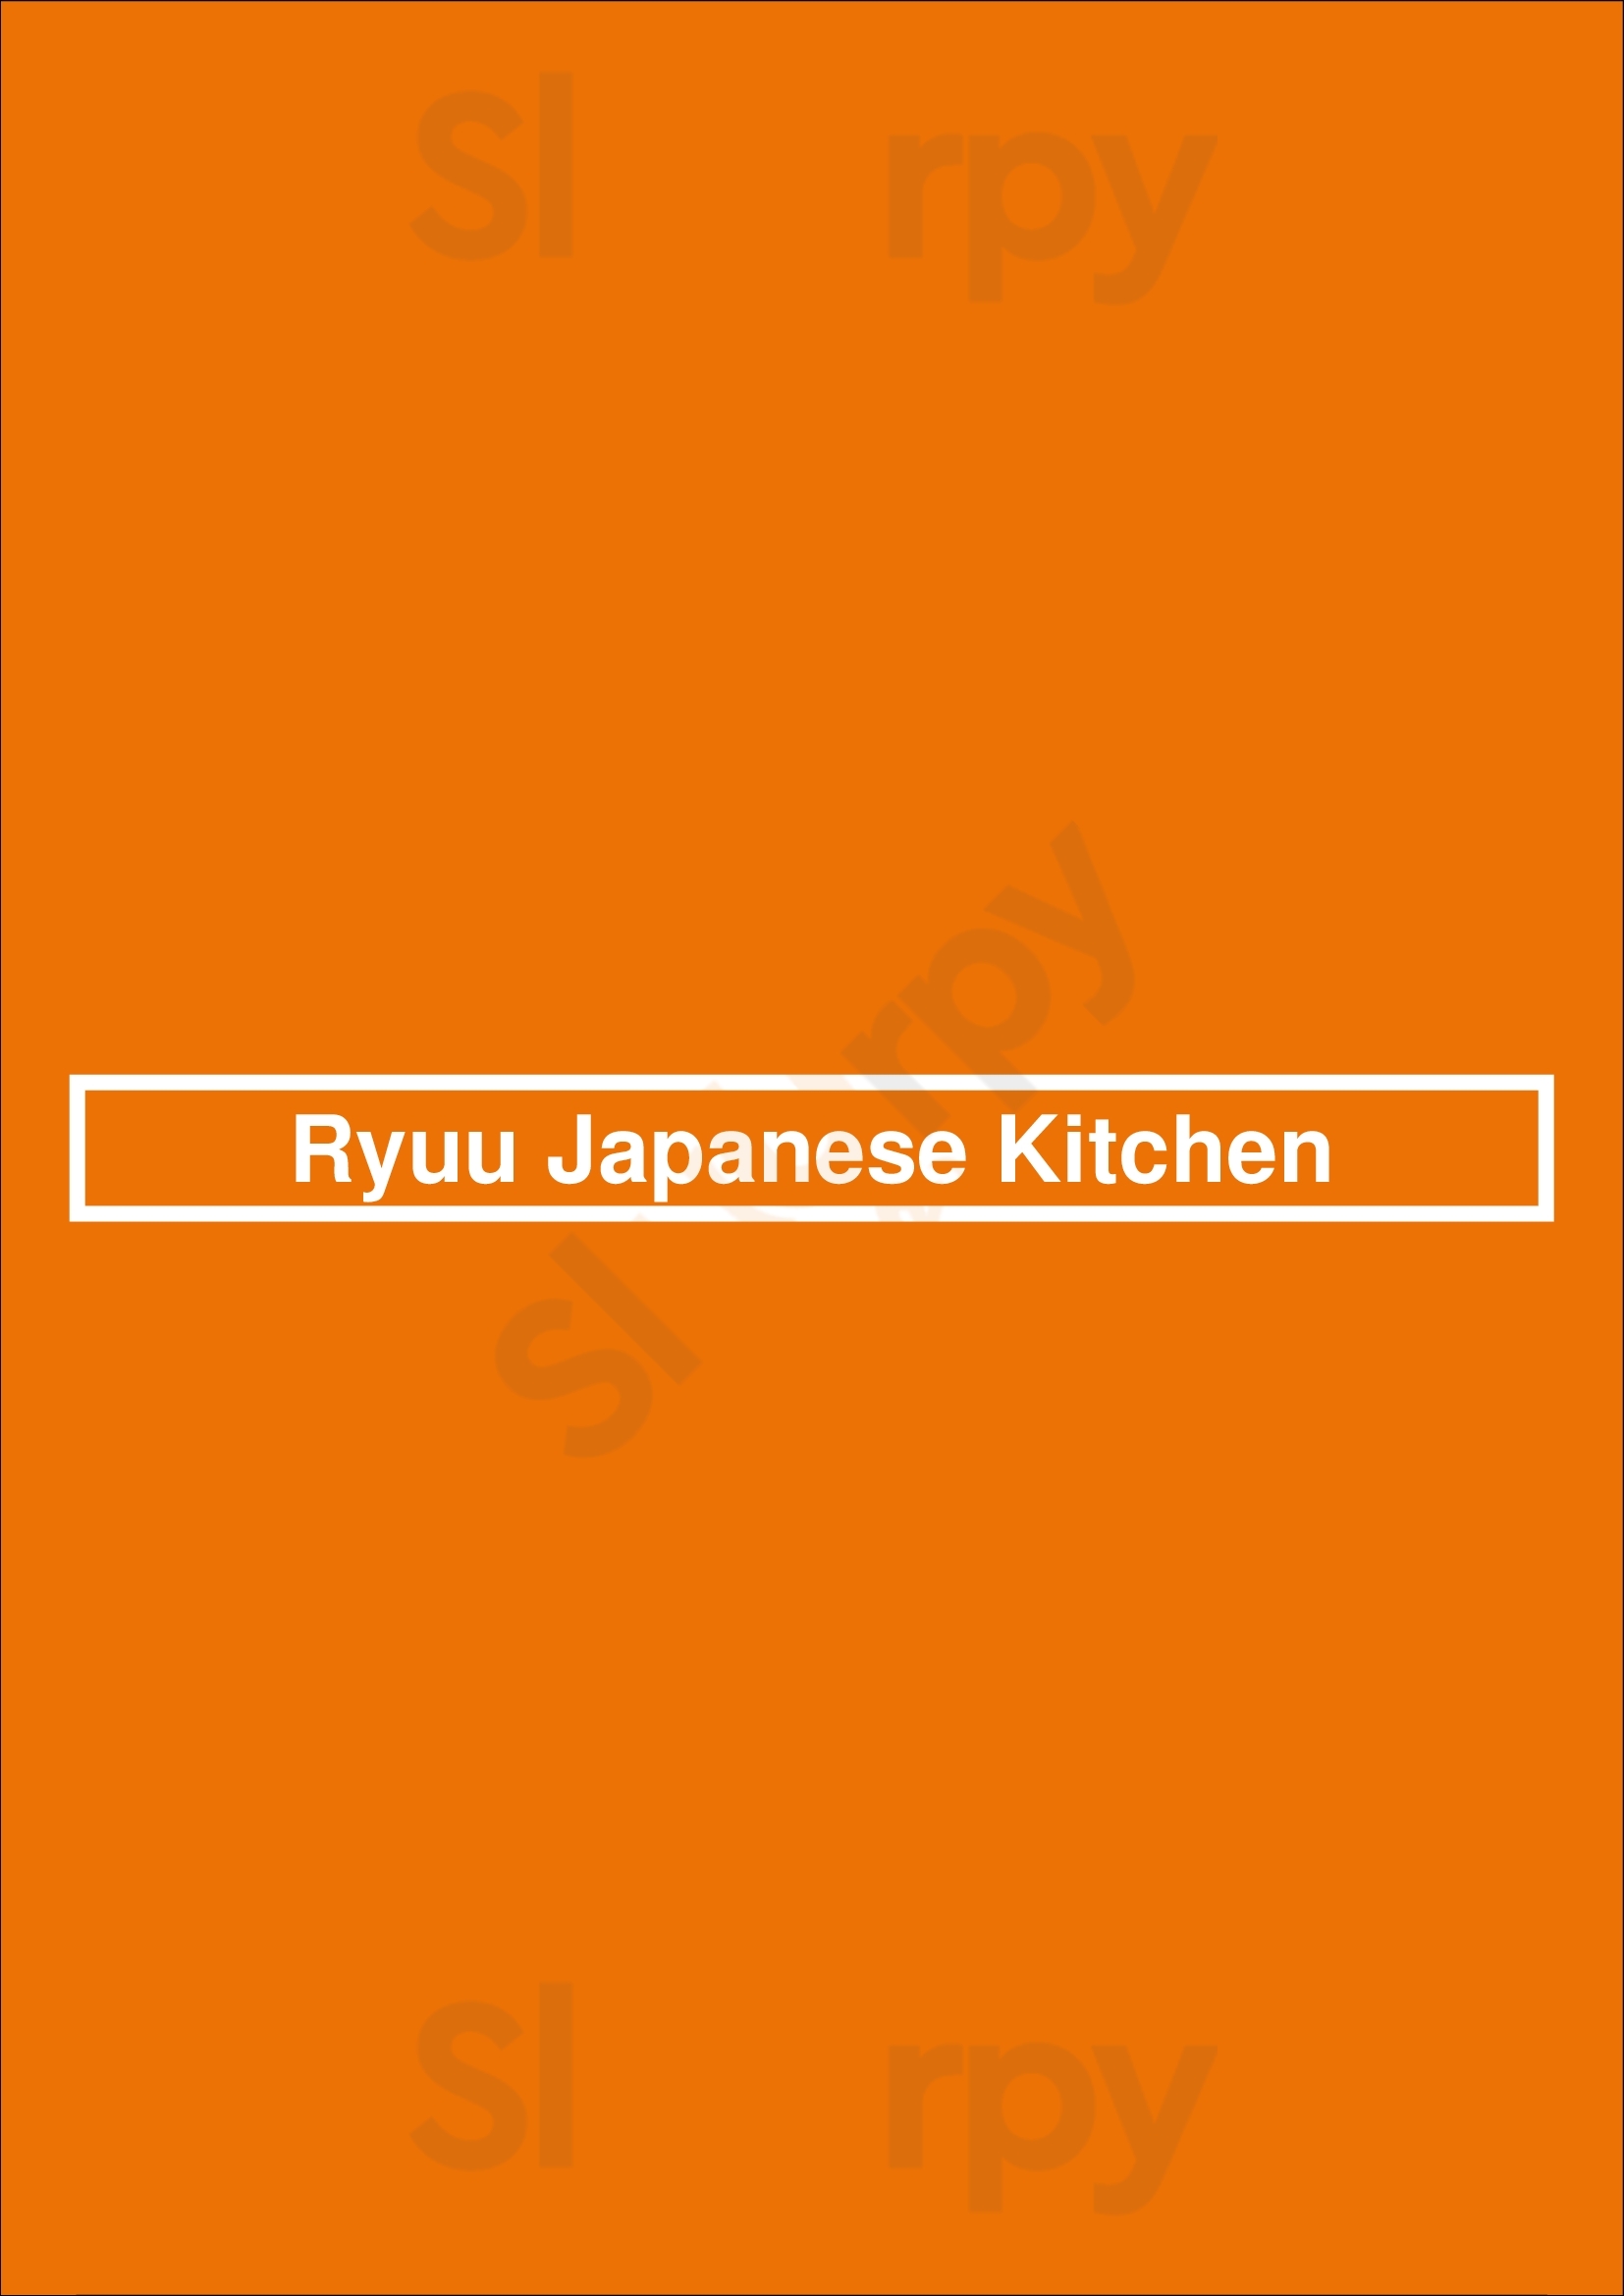 Ryuu Japanese Kitchen Vancouver Menu - 1